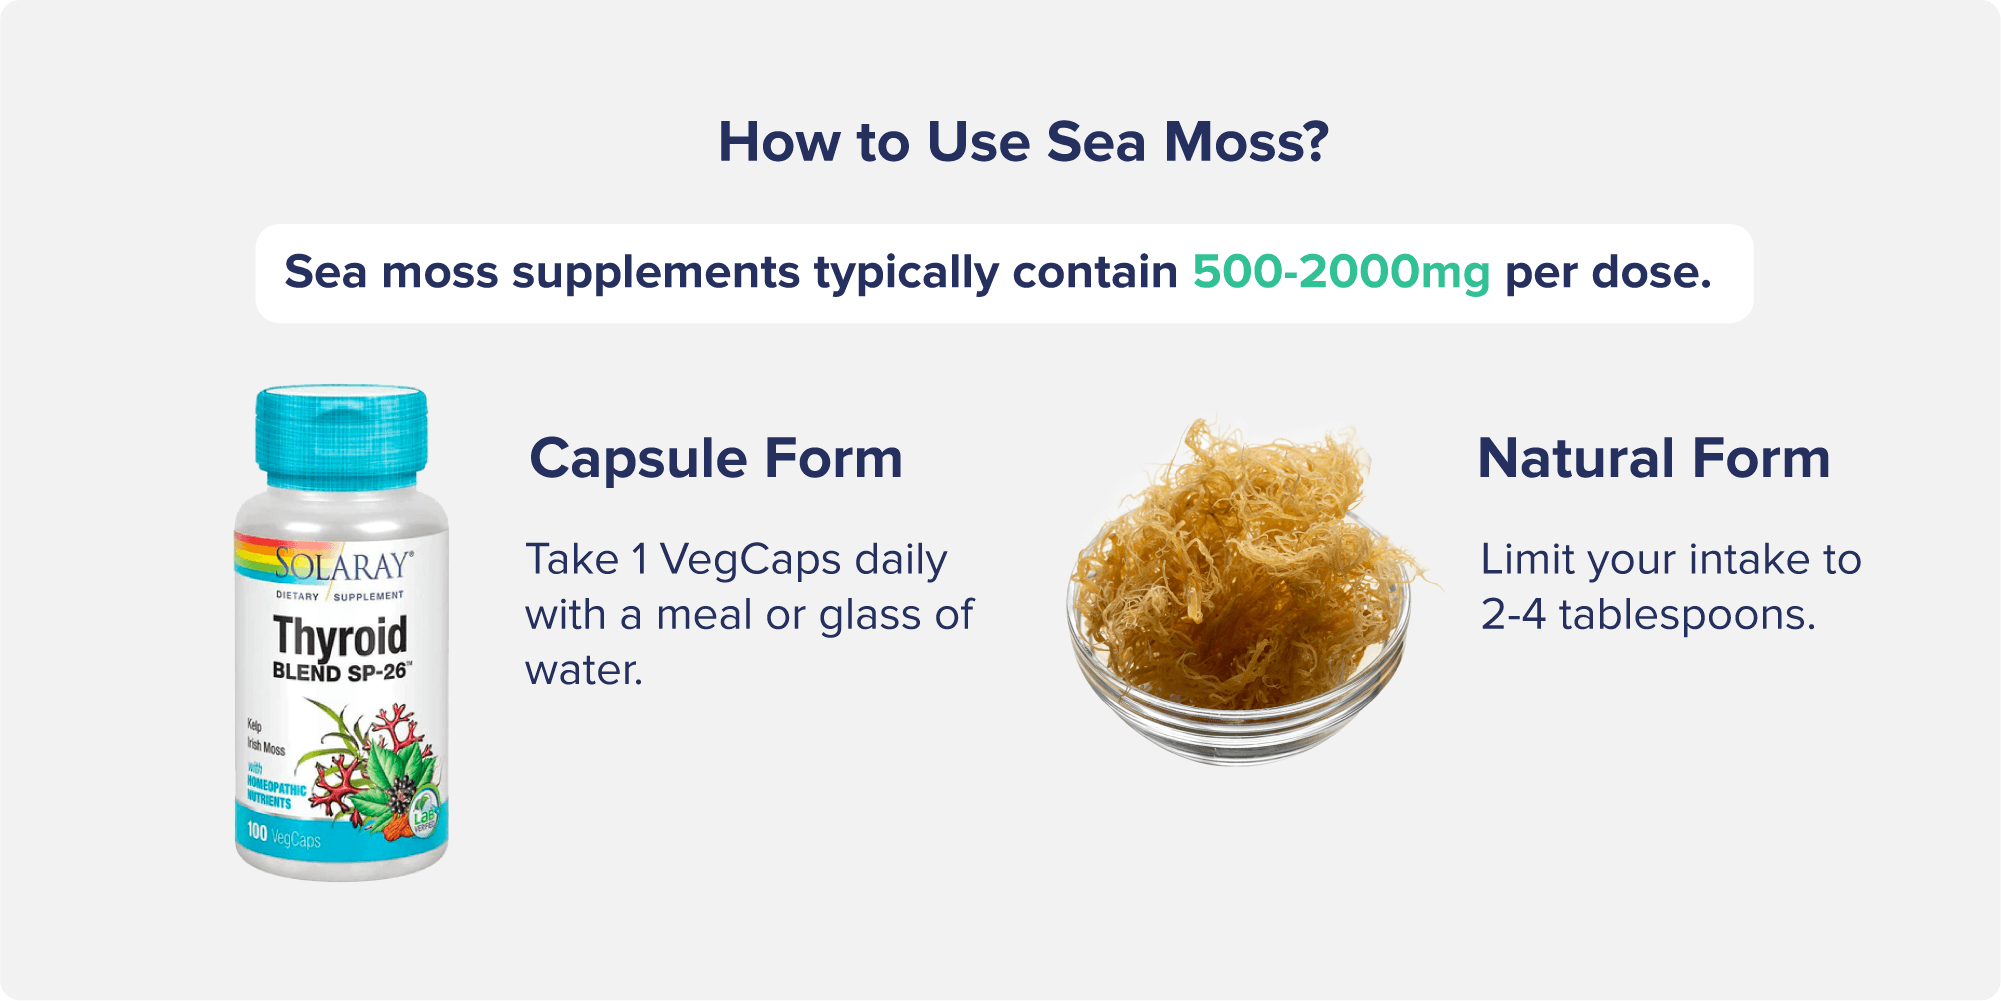 How to Use Sea Moss